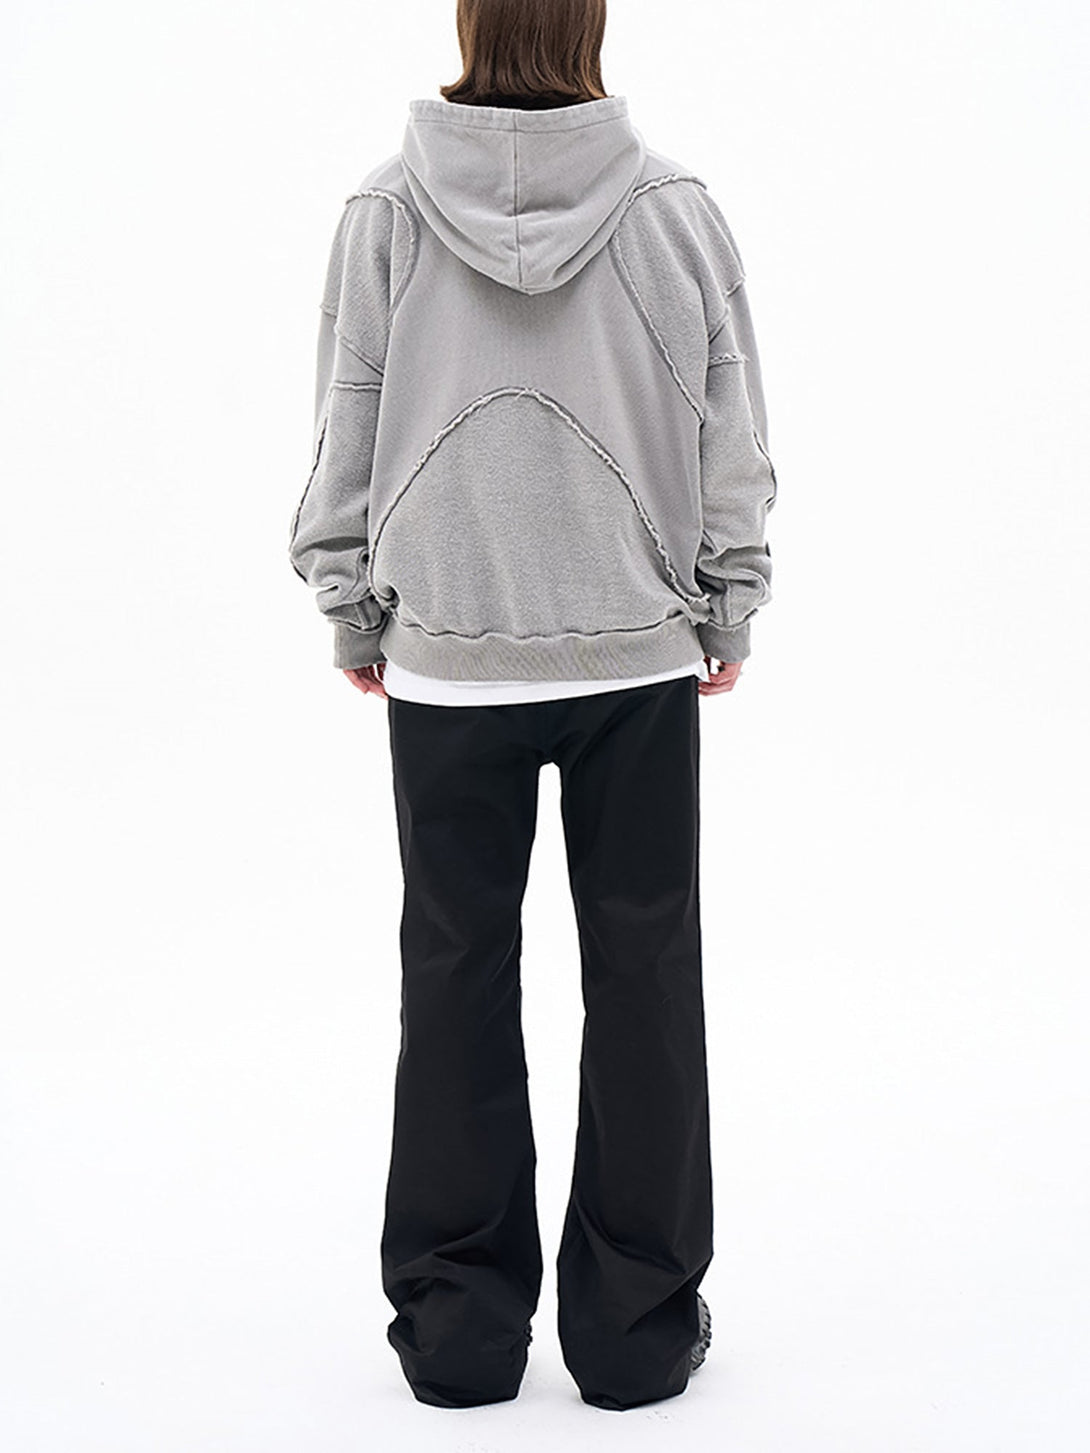 Majesda® - Personalized Reverse Car Design Hoodie- Outfit Ideas - Streetwear Fashion - majesda.com